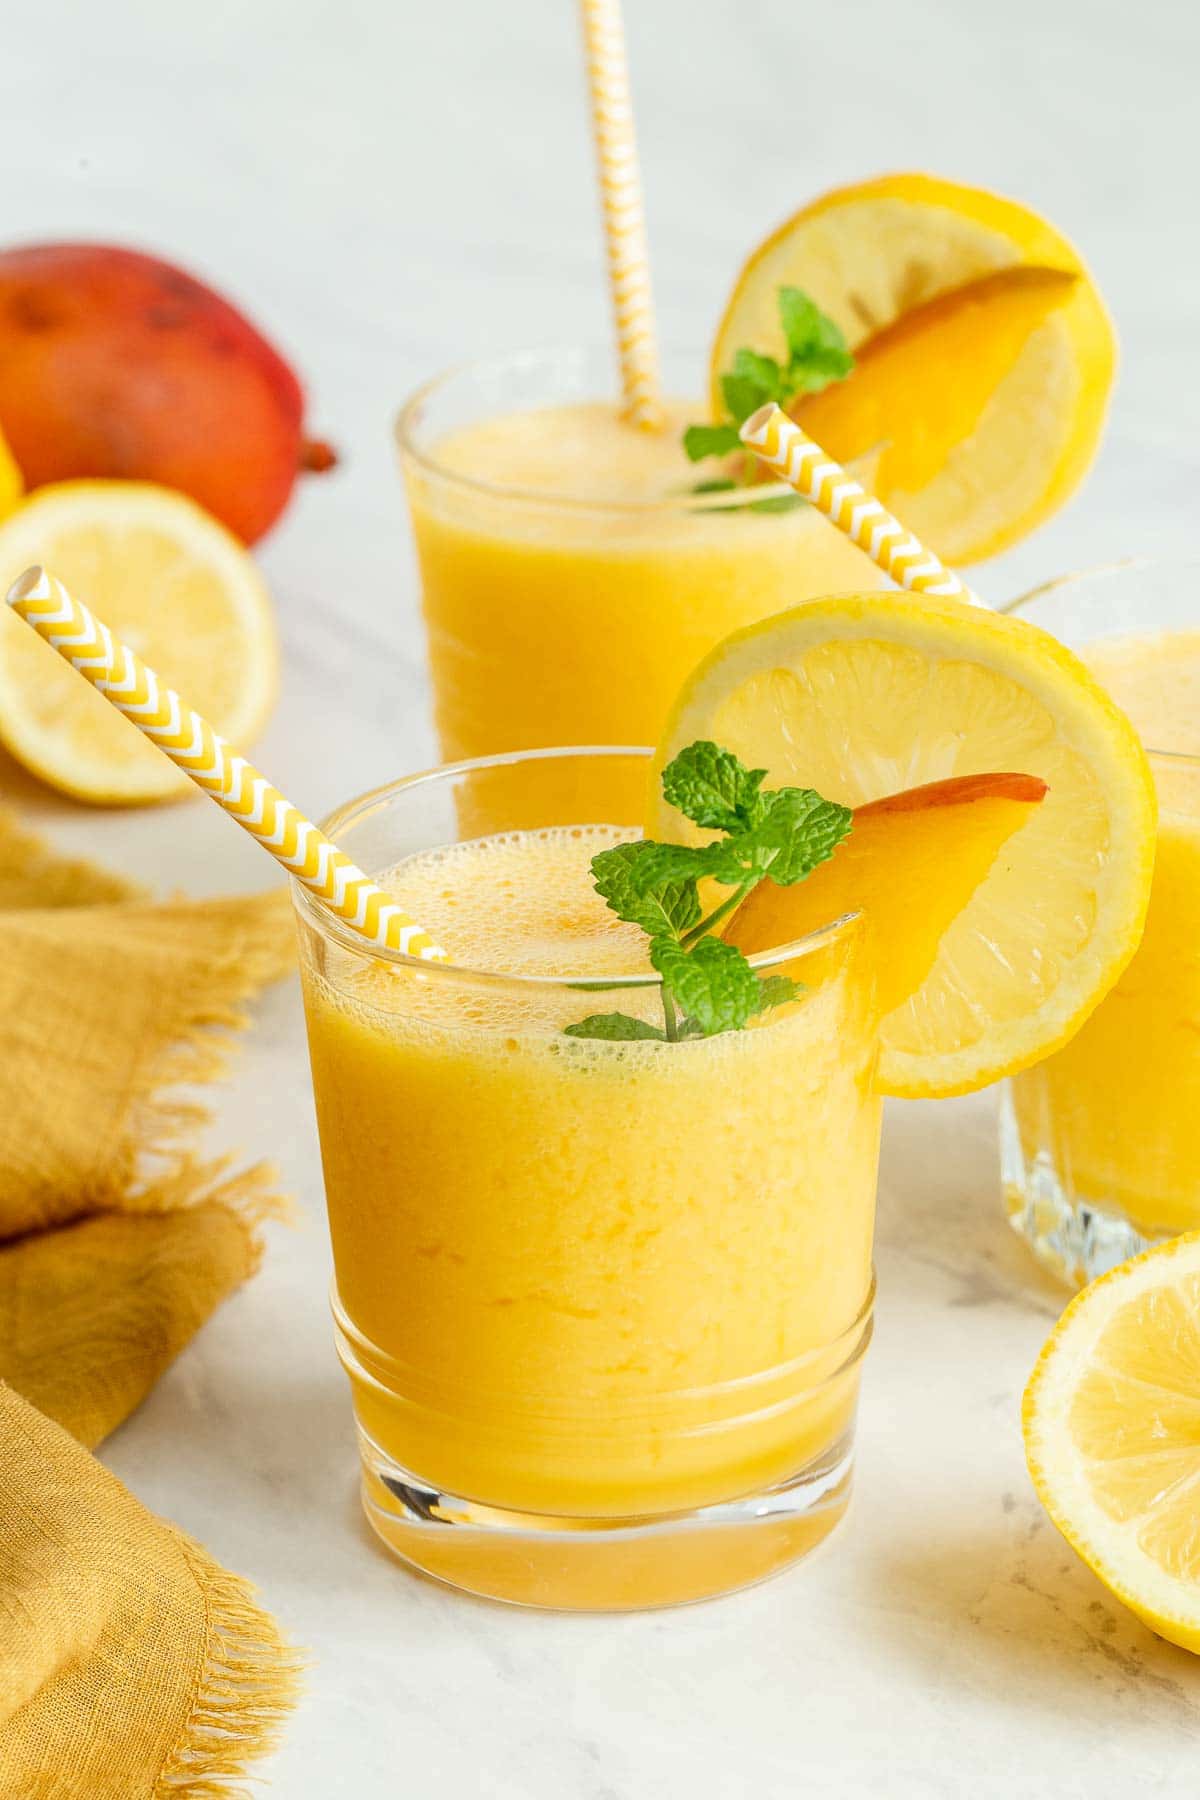 Two glasses of mango lemonade garnished with lemon slices.